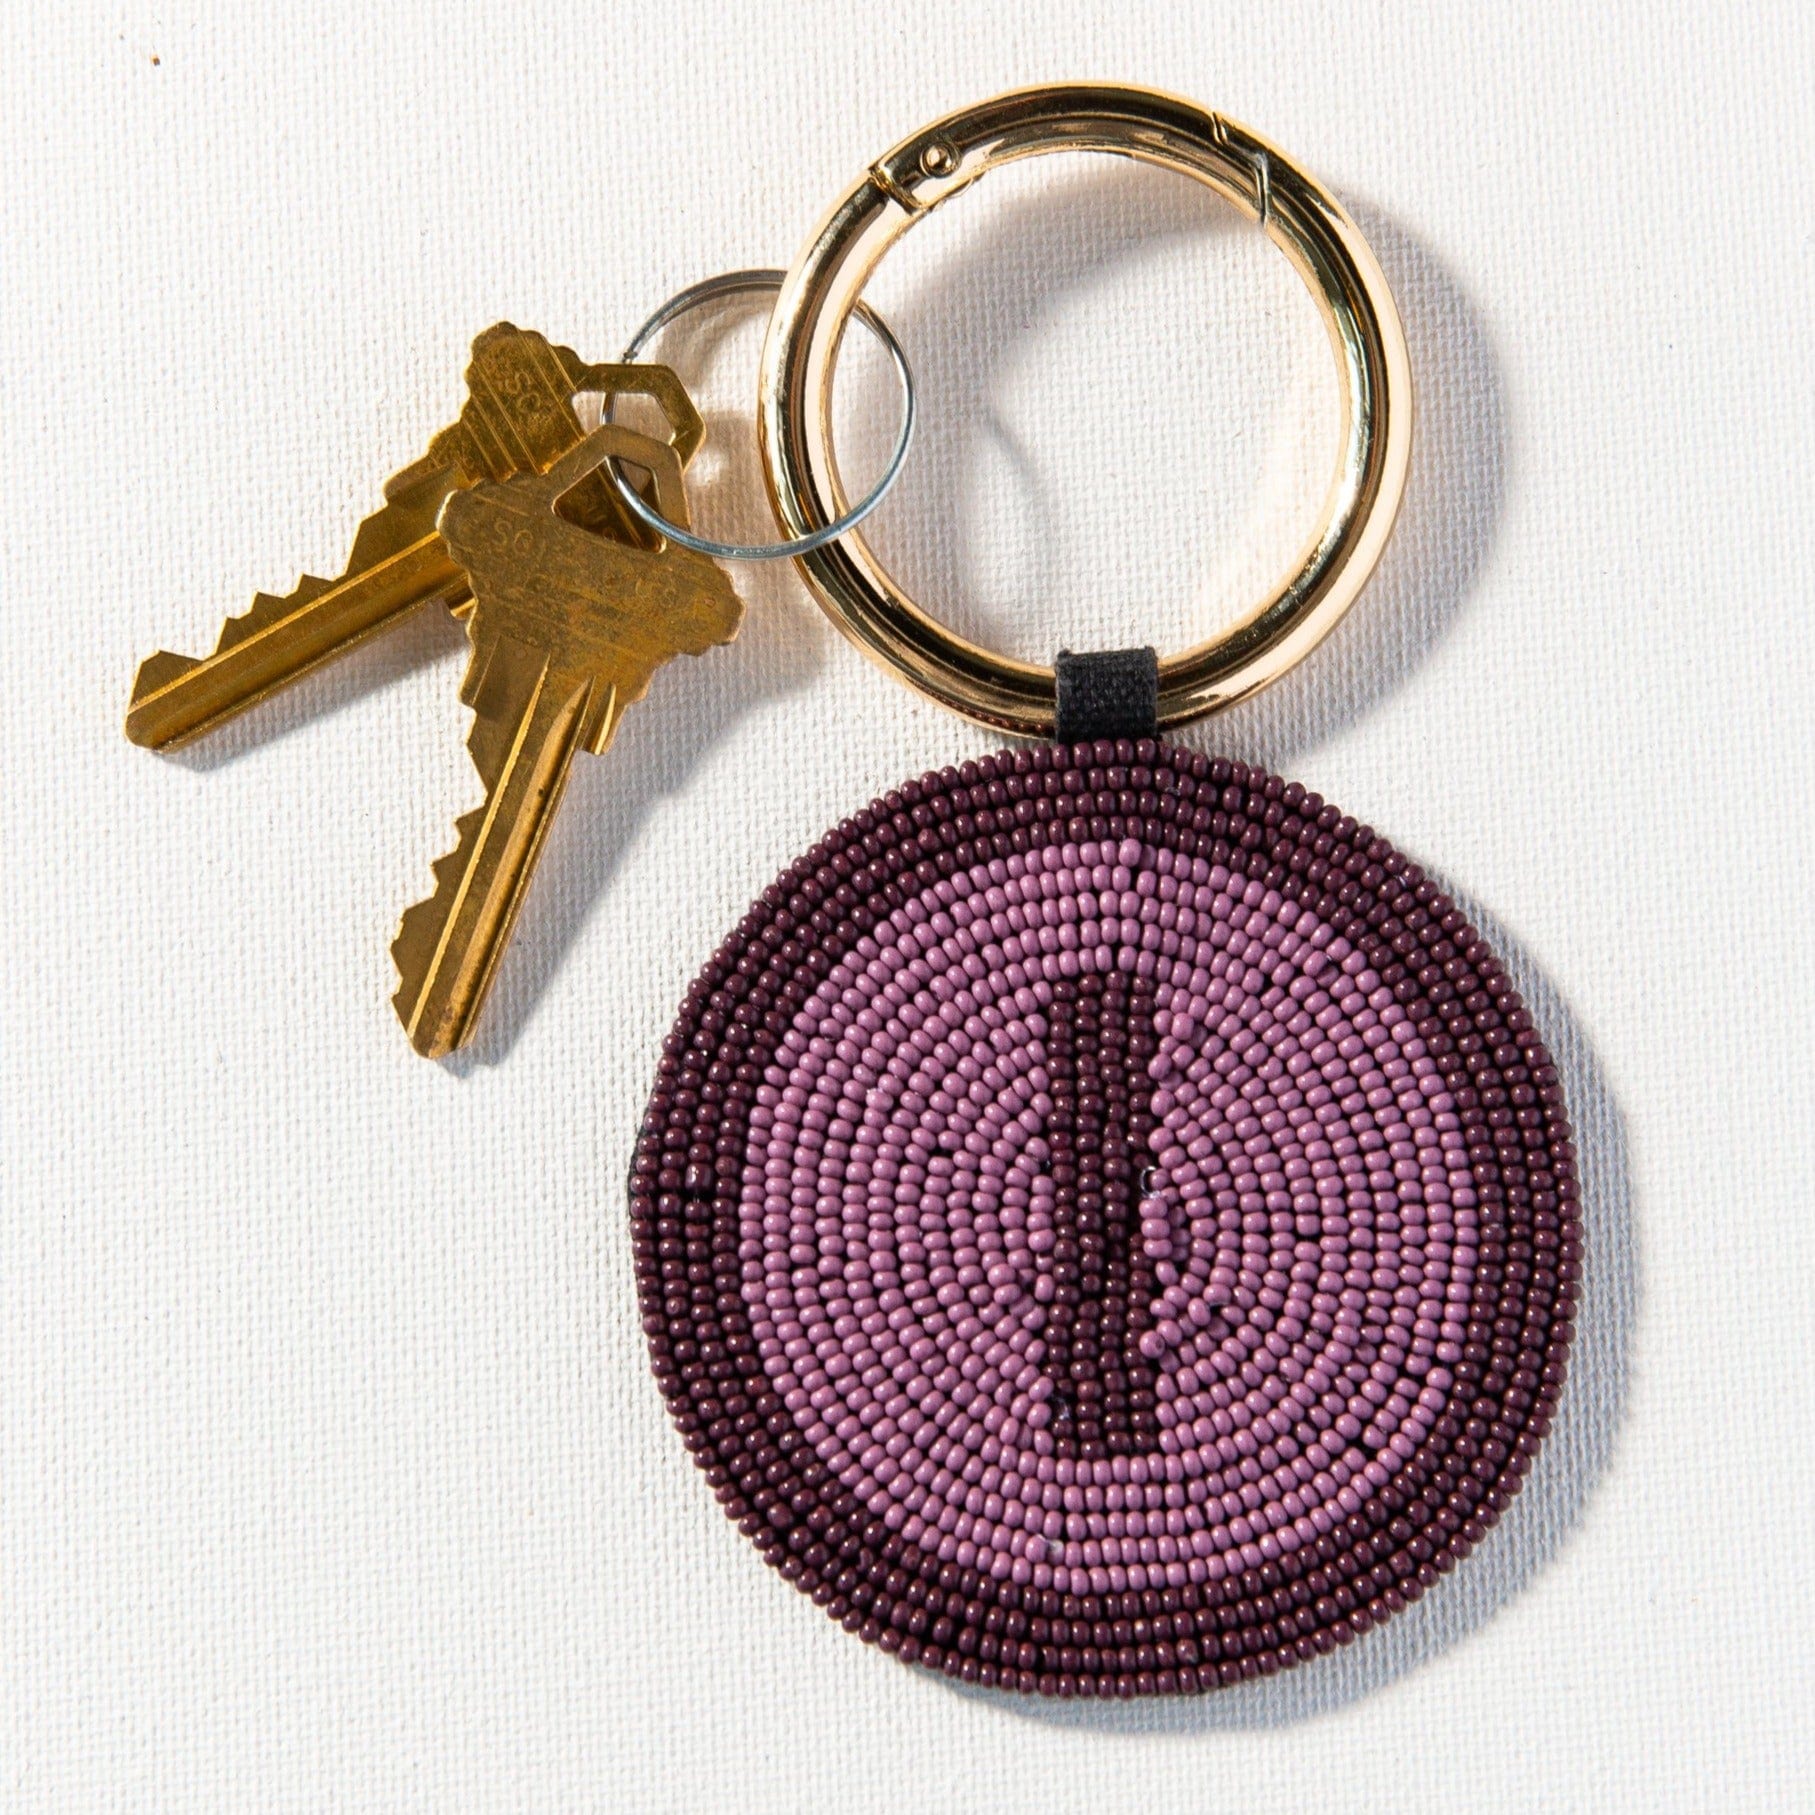 Marleylilly Monogrammed Beaded Key Ring